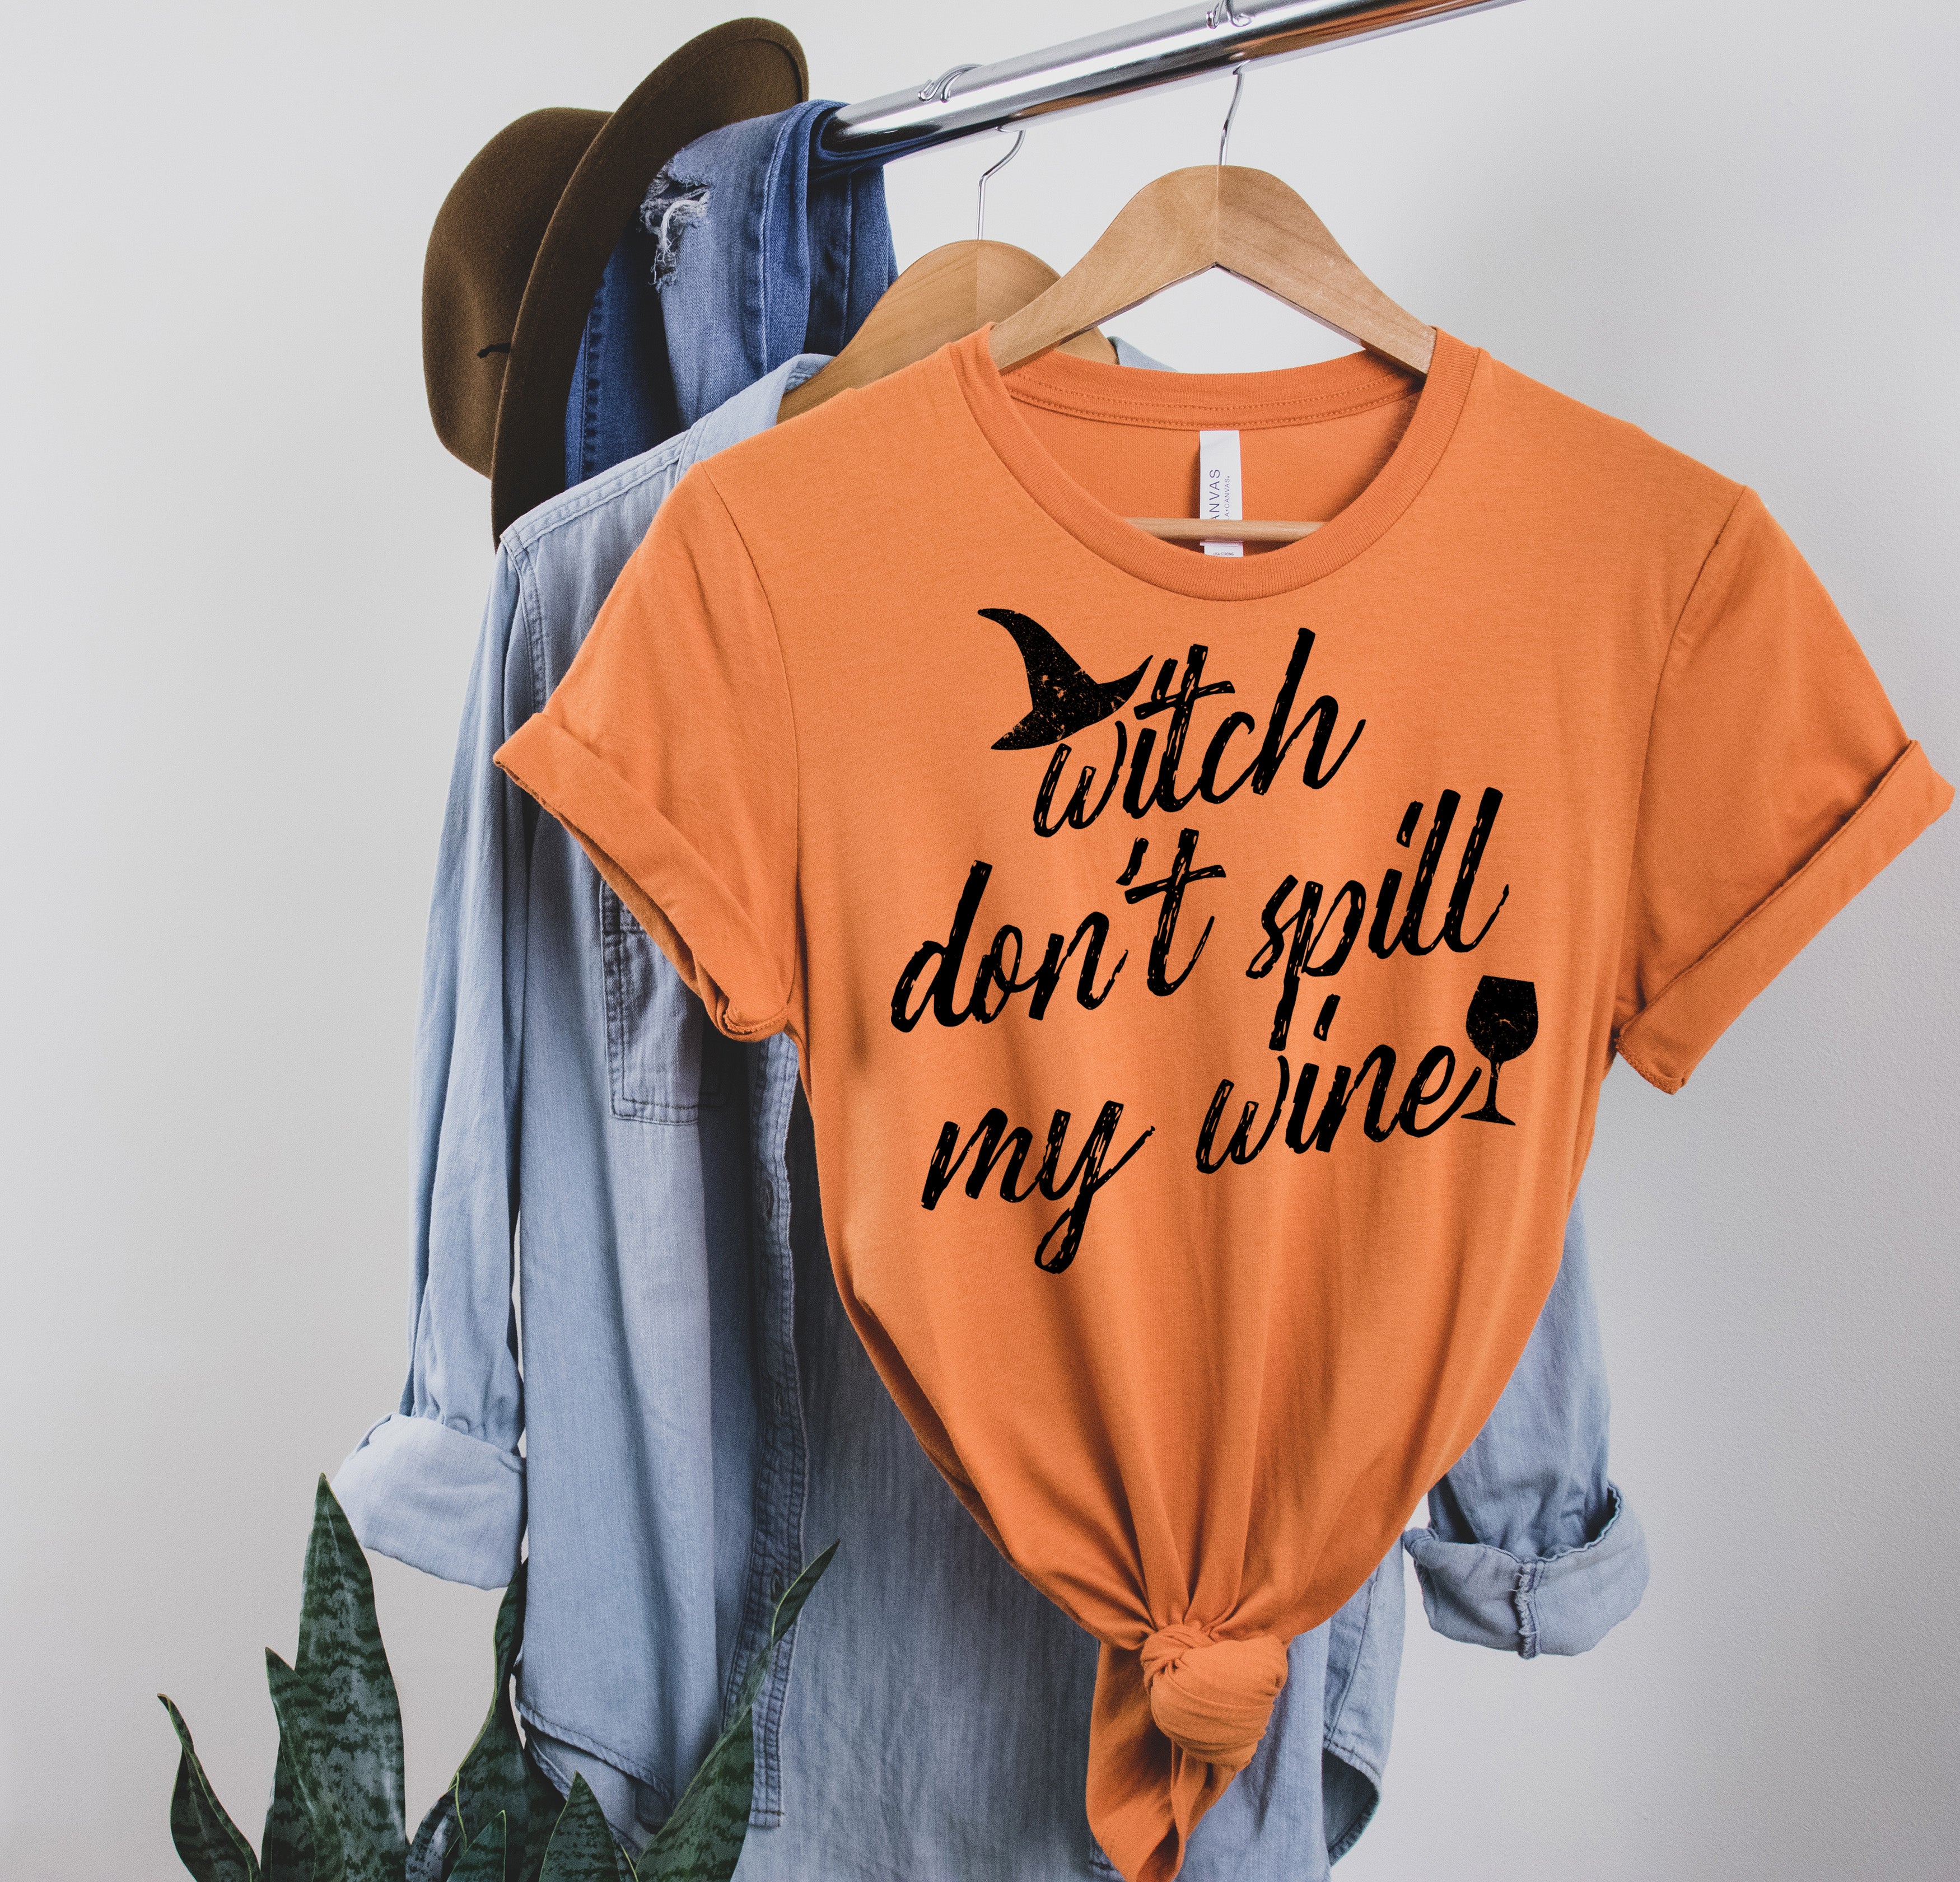 witches drinking wine halloween shirt - HighCiti